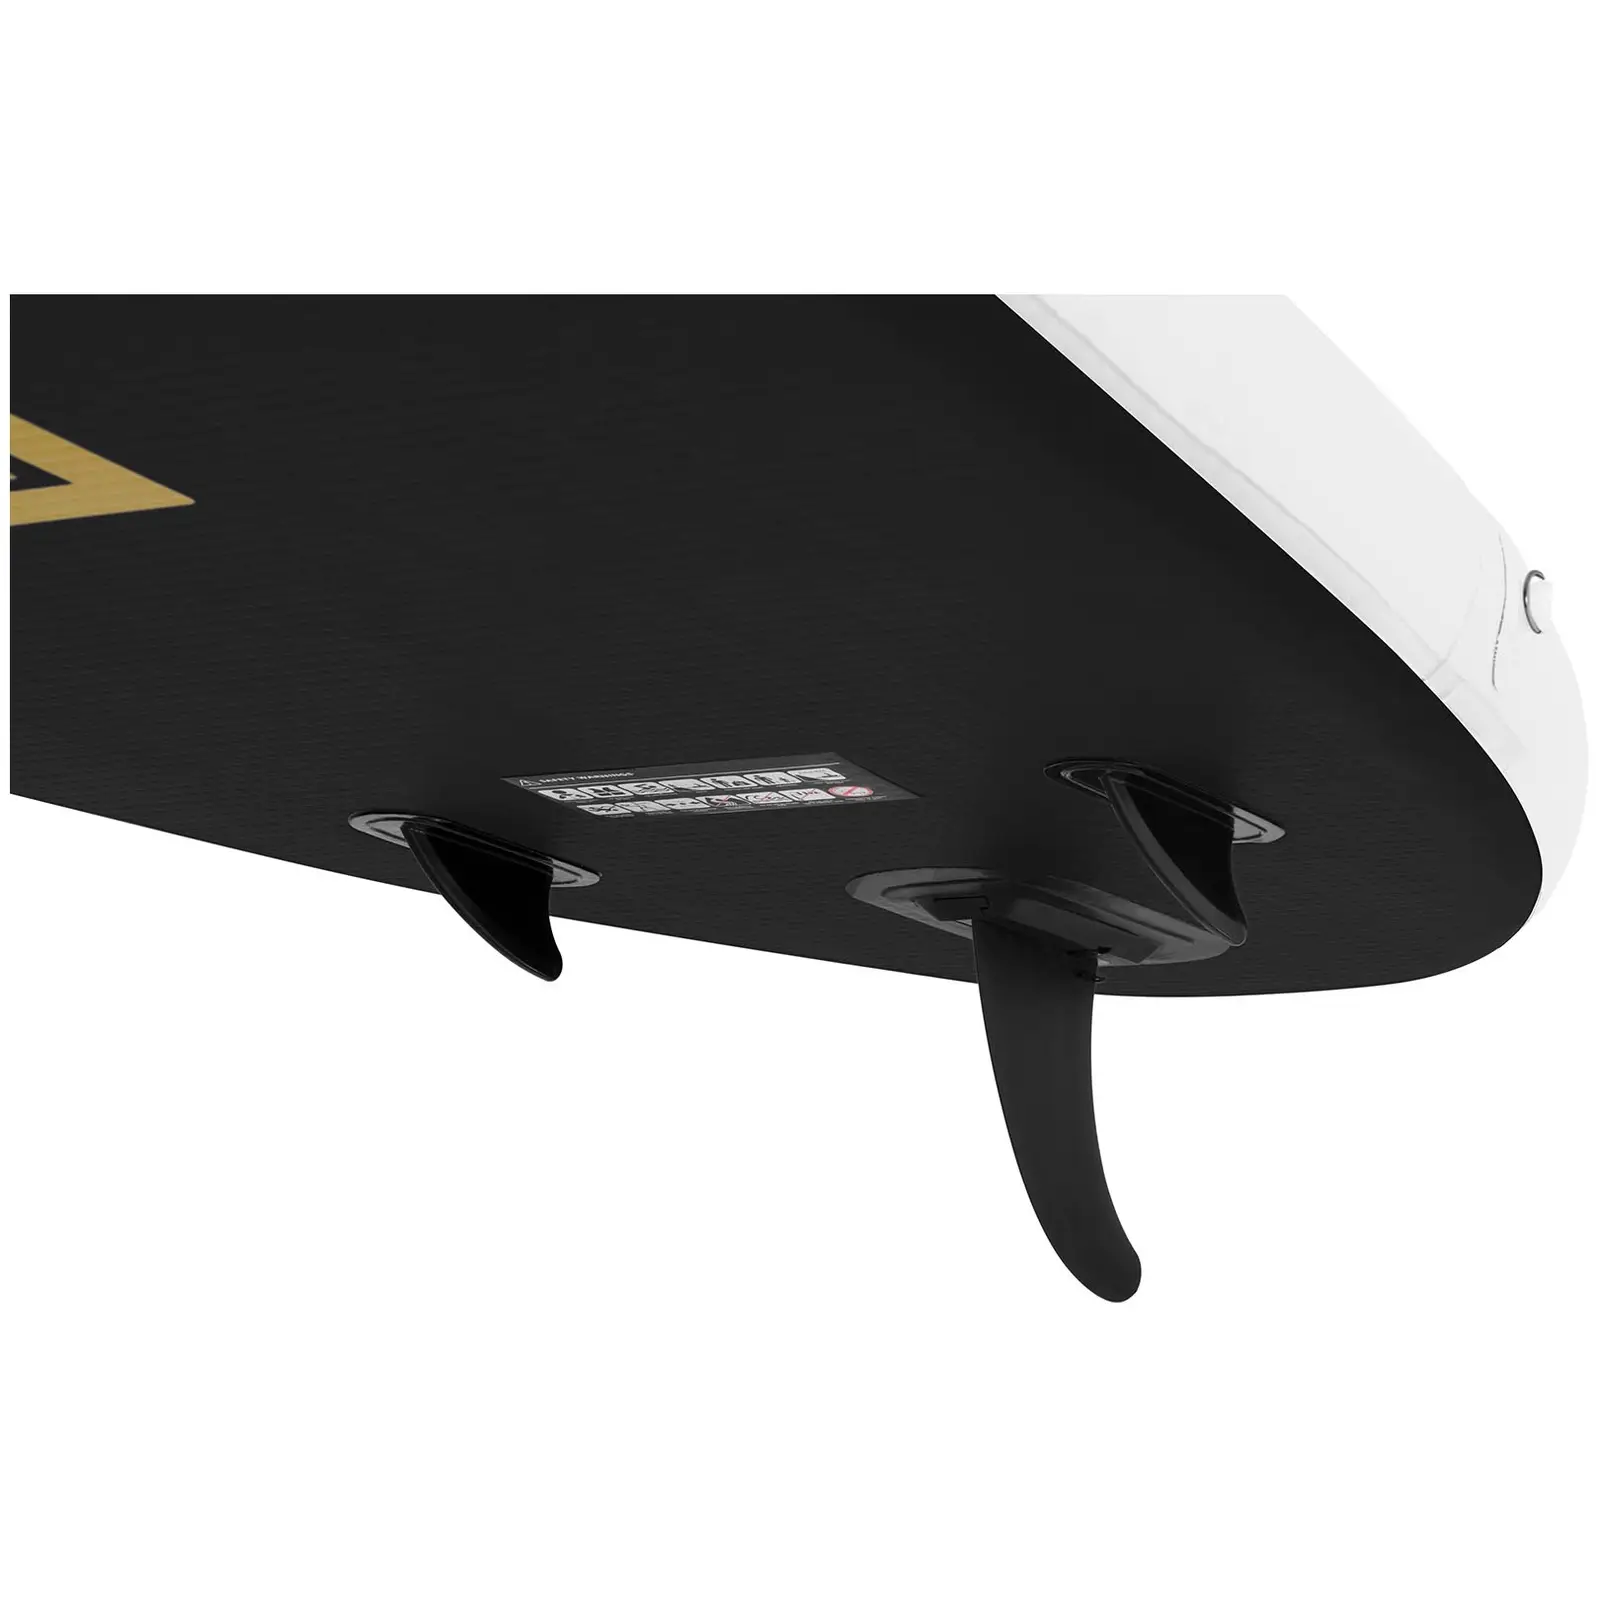 Nafukovací stand up paddleboard - sada - 230 kg - 365 x 110 x 15 cm